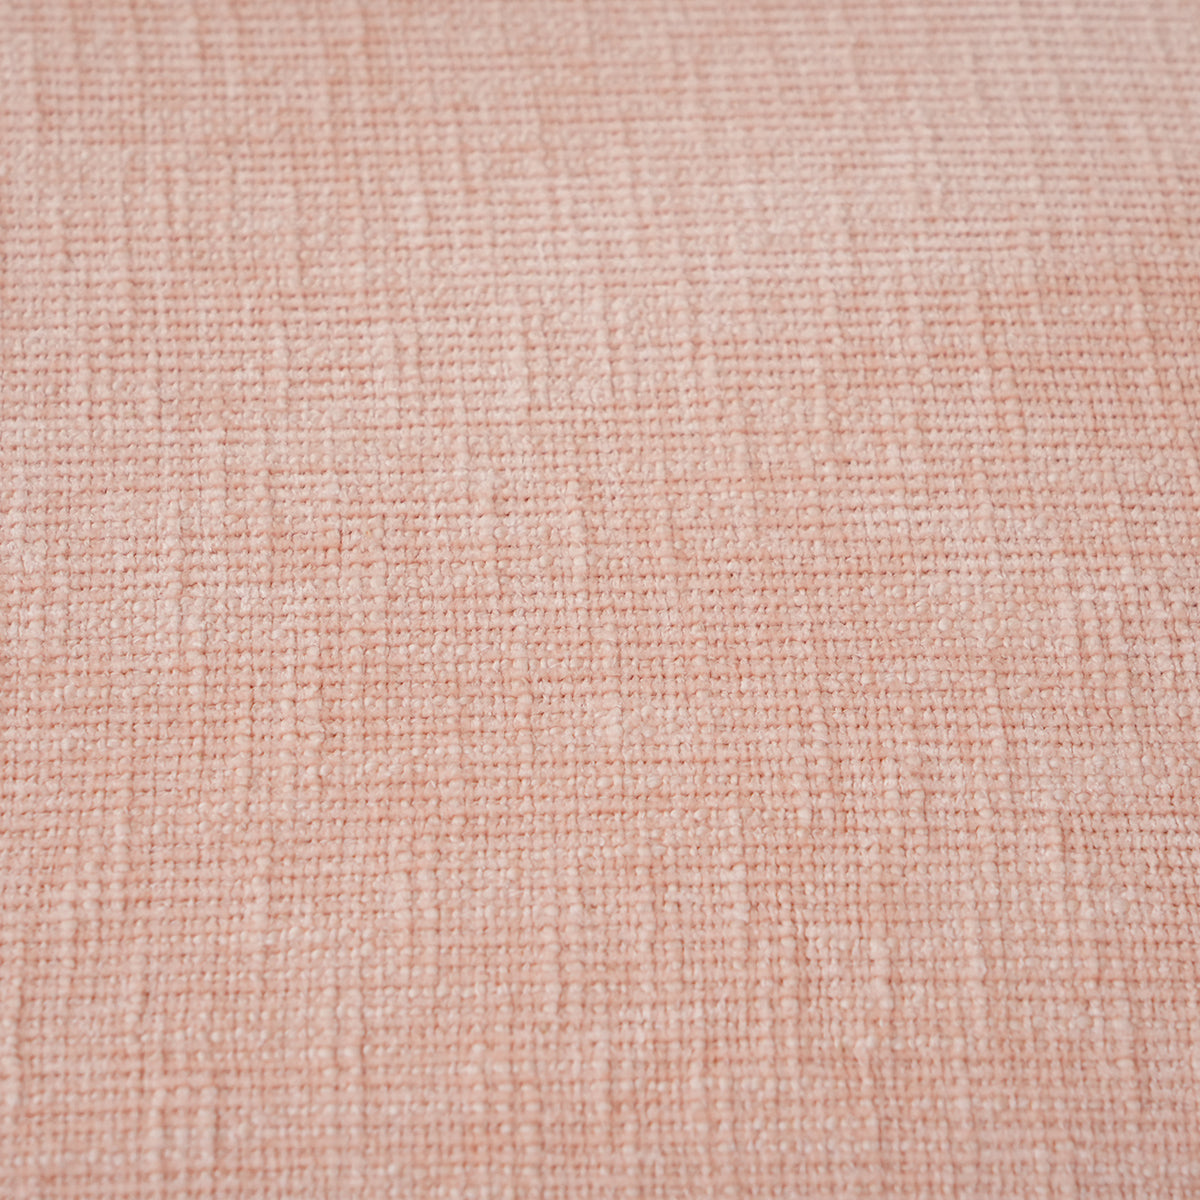 Tranquil Essence Burb Slub Viscose Blend Weaved Peach Bed Cover